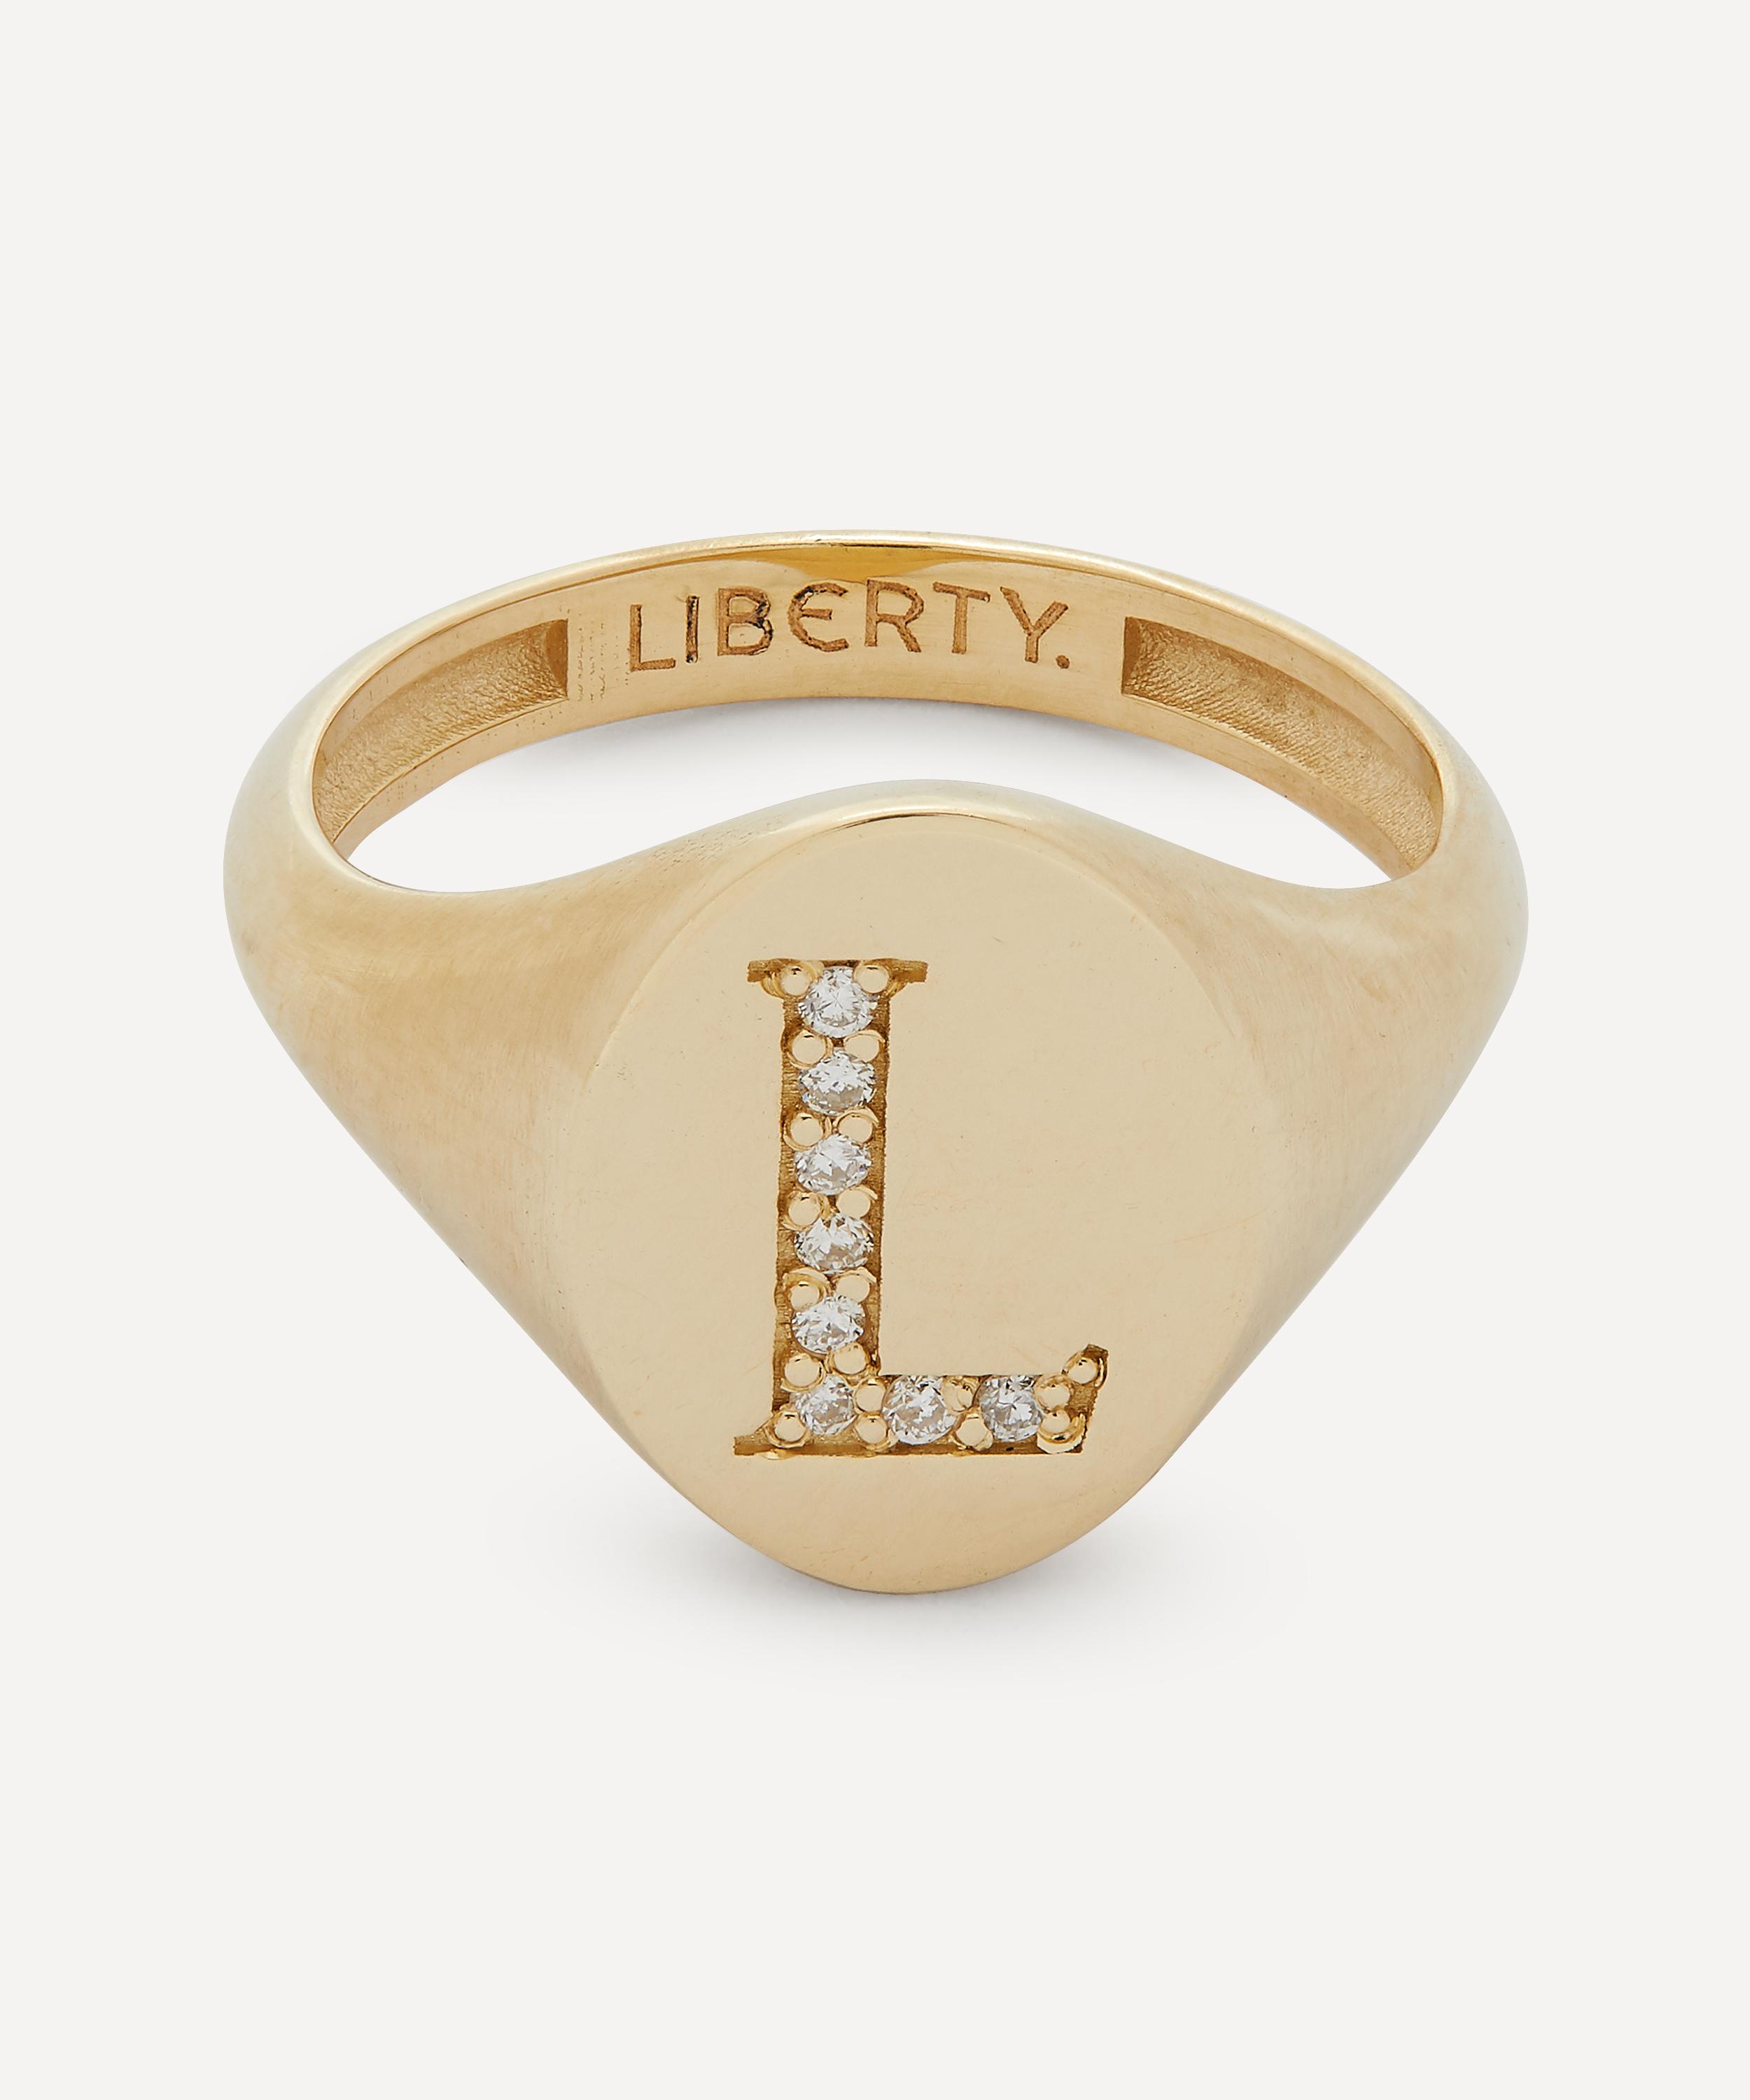 Liberty Pinky Ring 3号 10k ダイヤ - リング